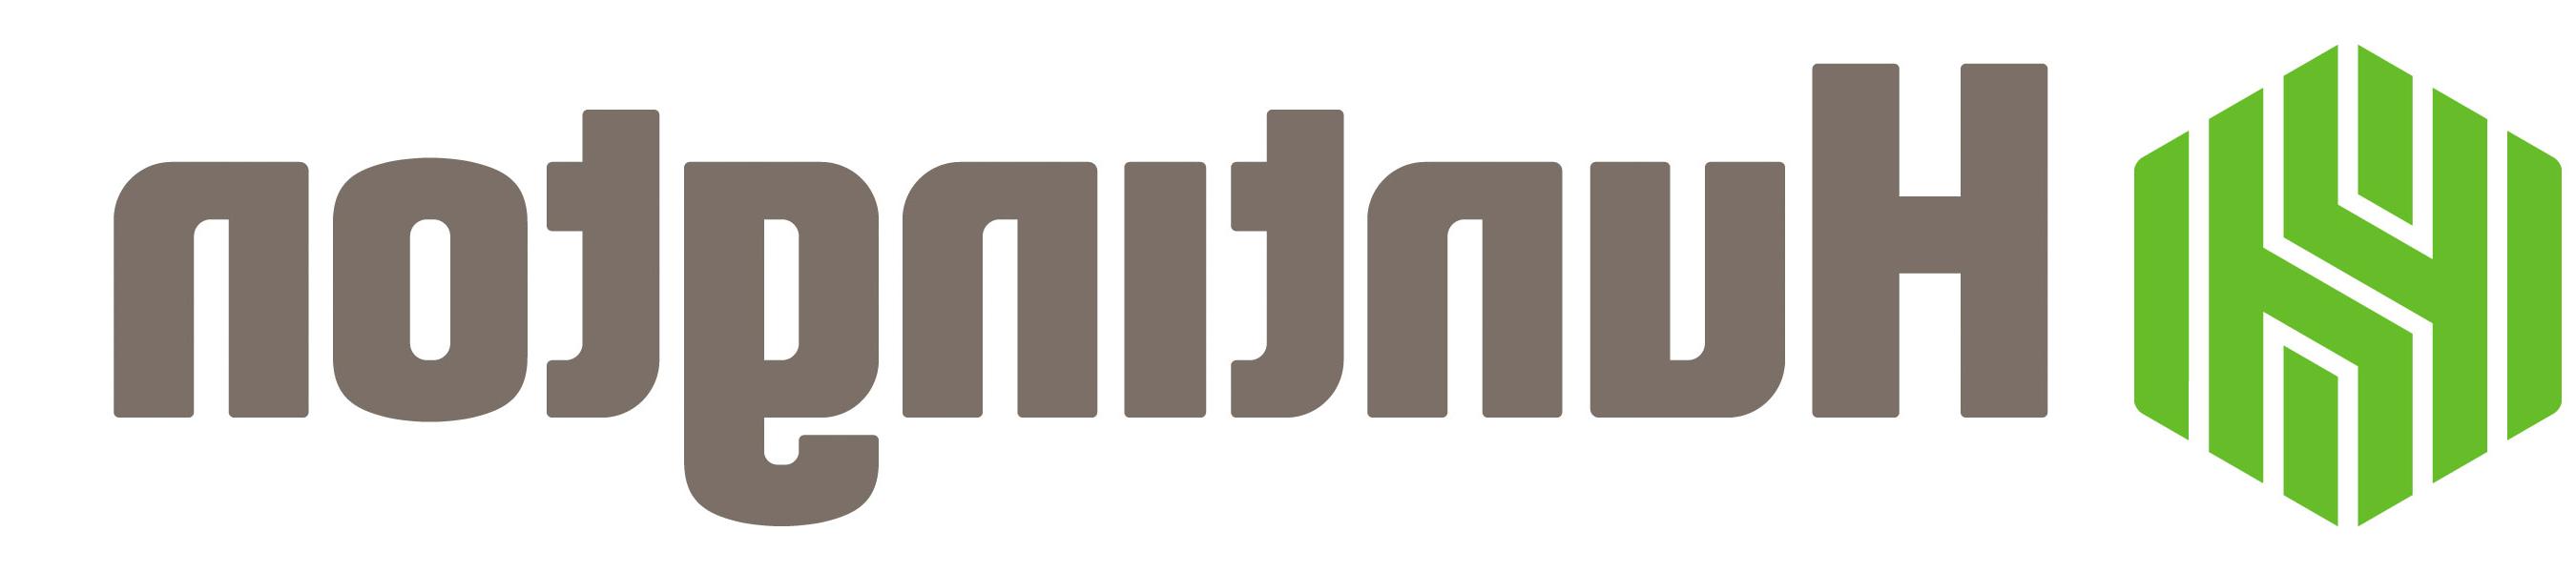 huntington bank logo